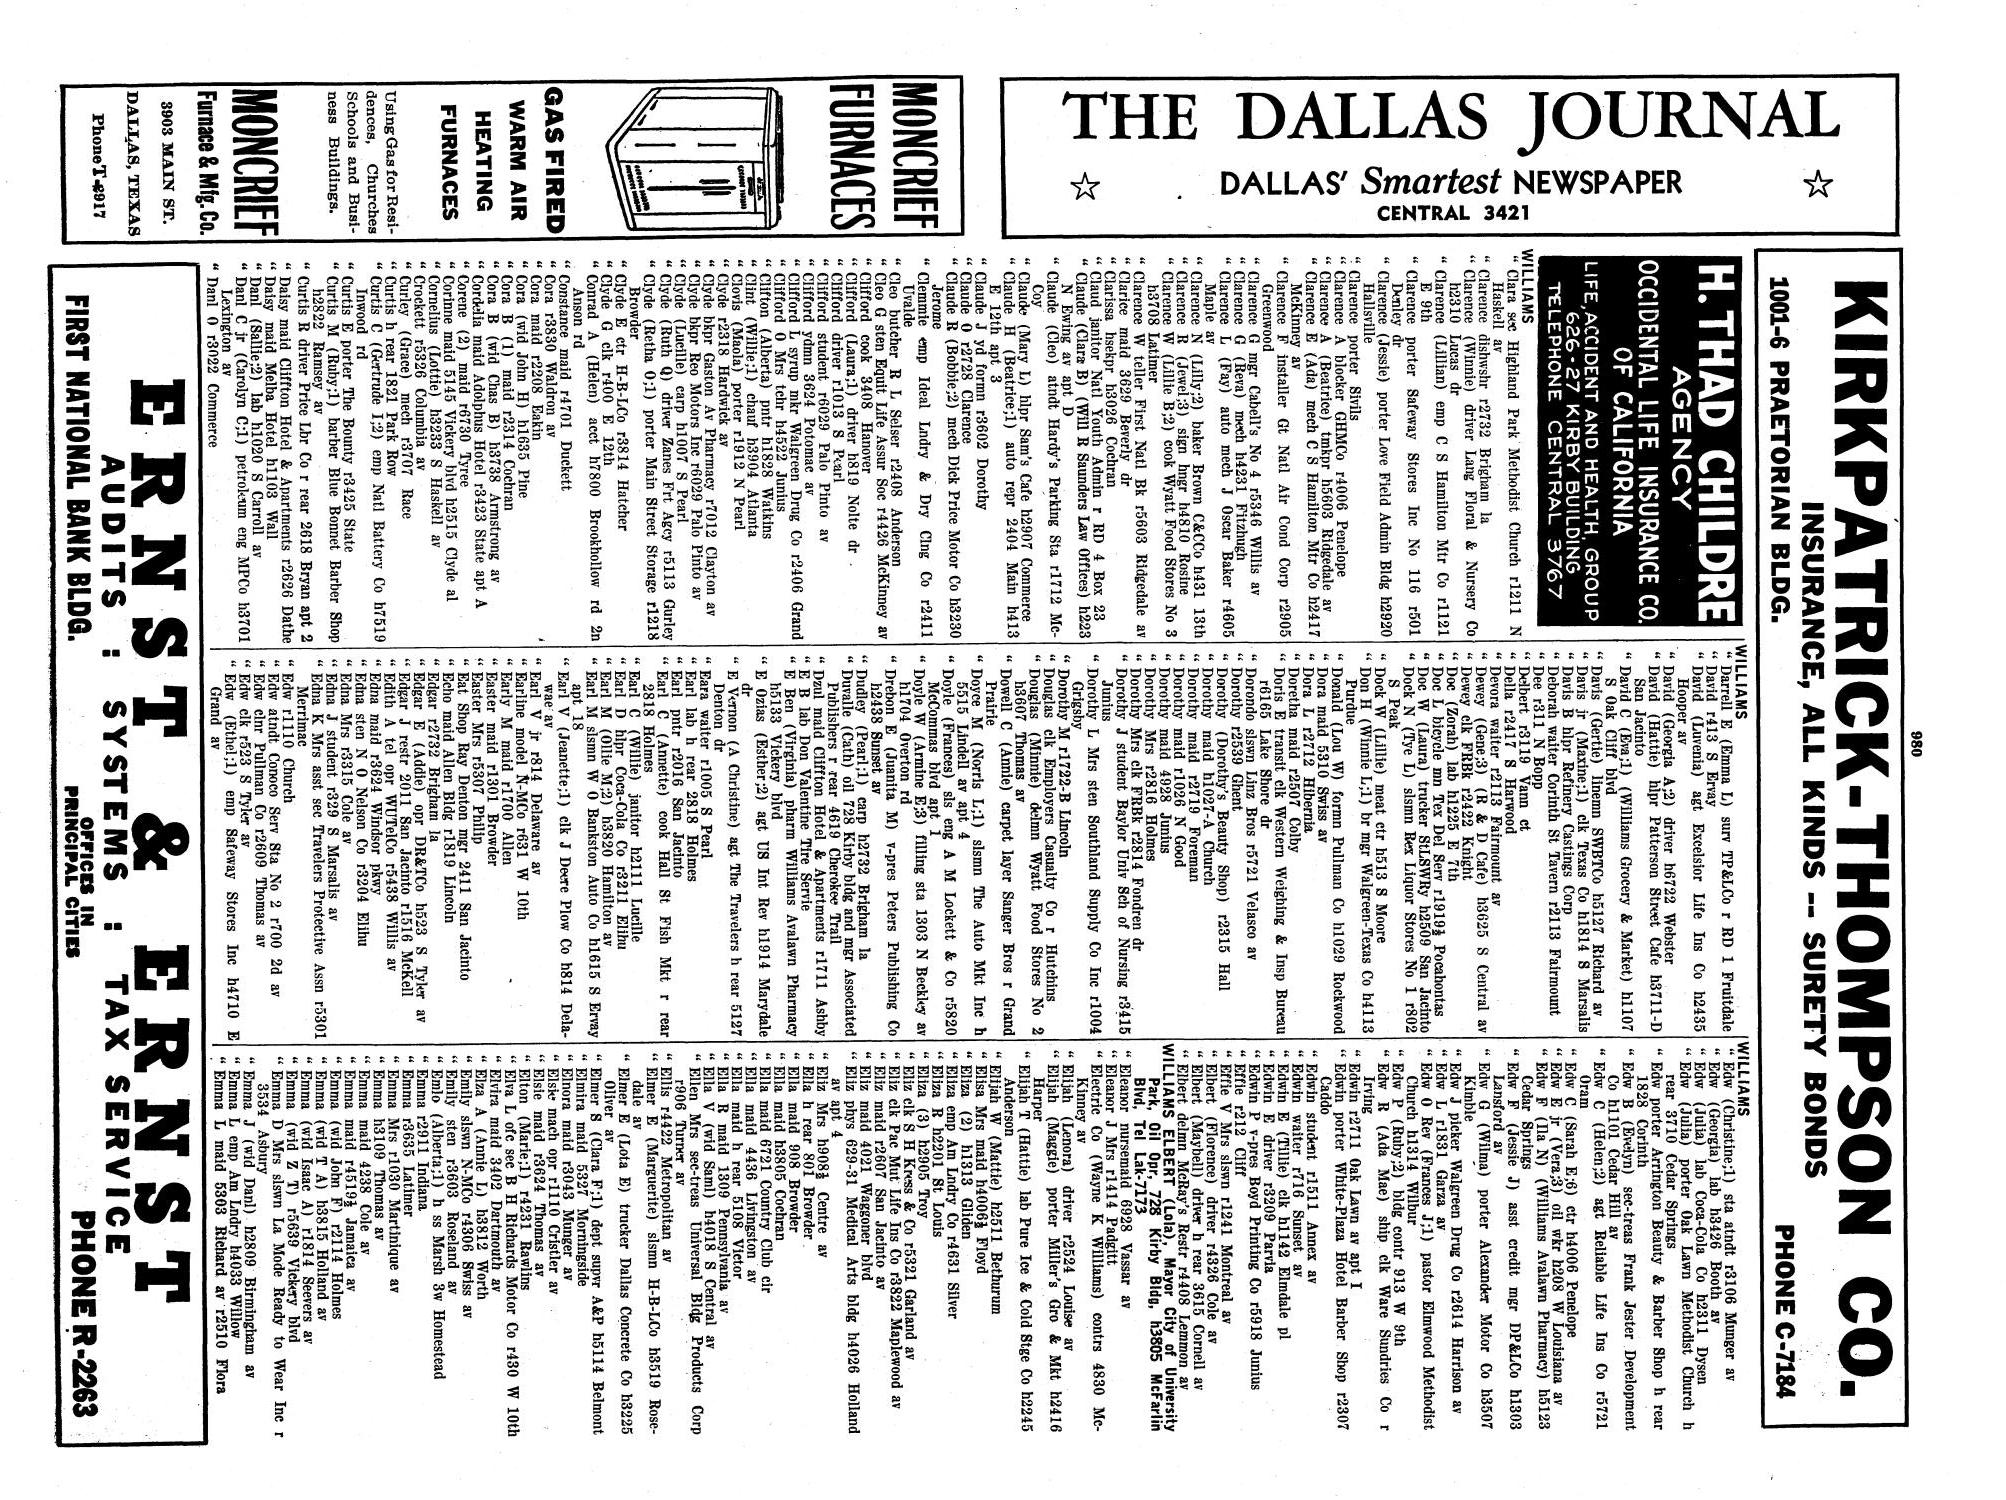 Dallas City Directory, 1941
                                                
                                                    980
                                                